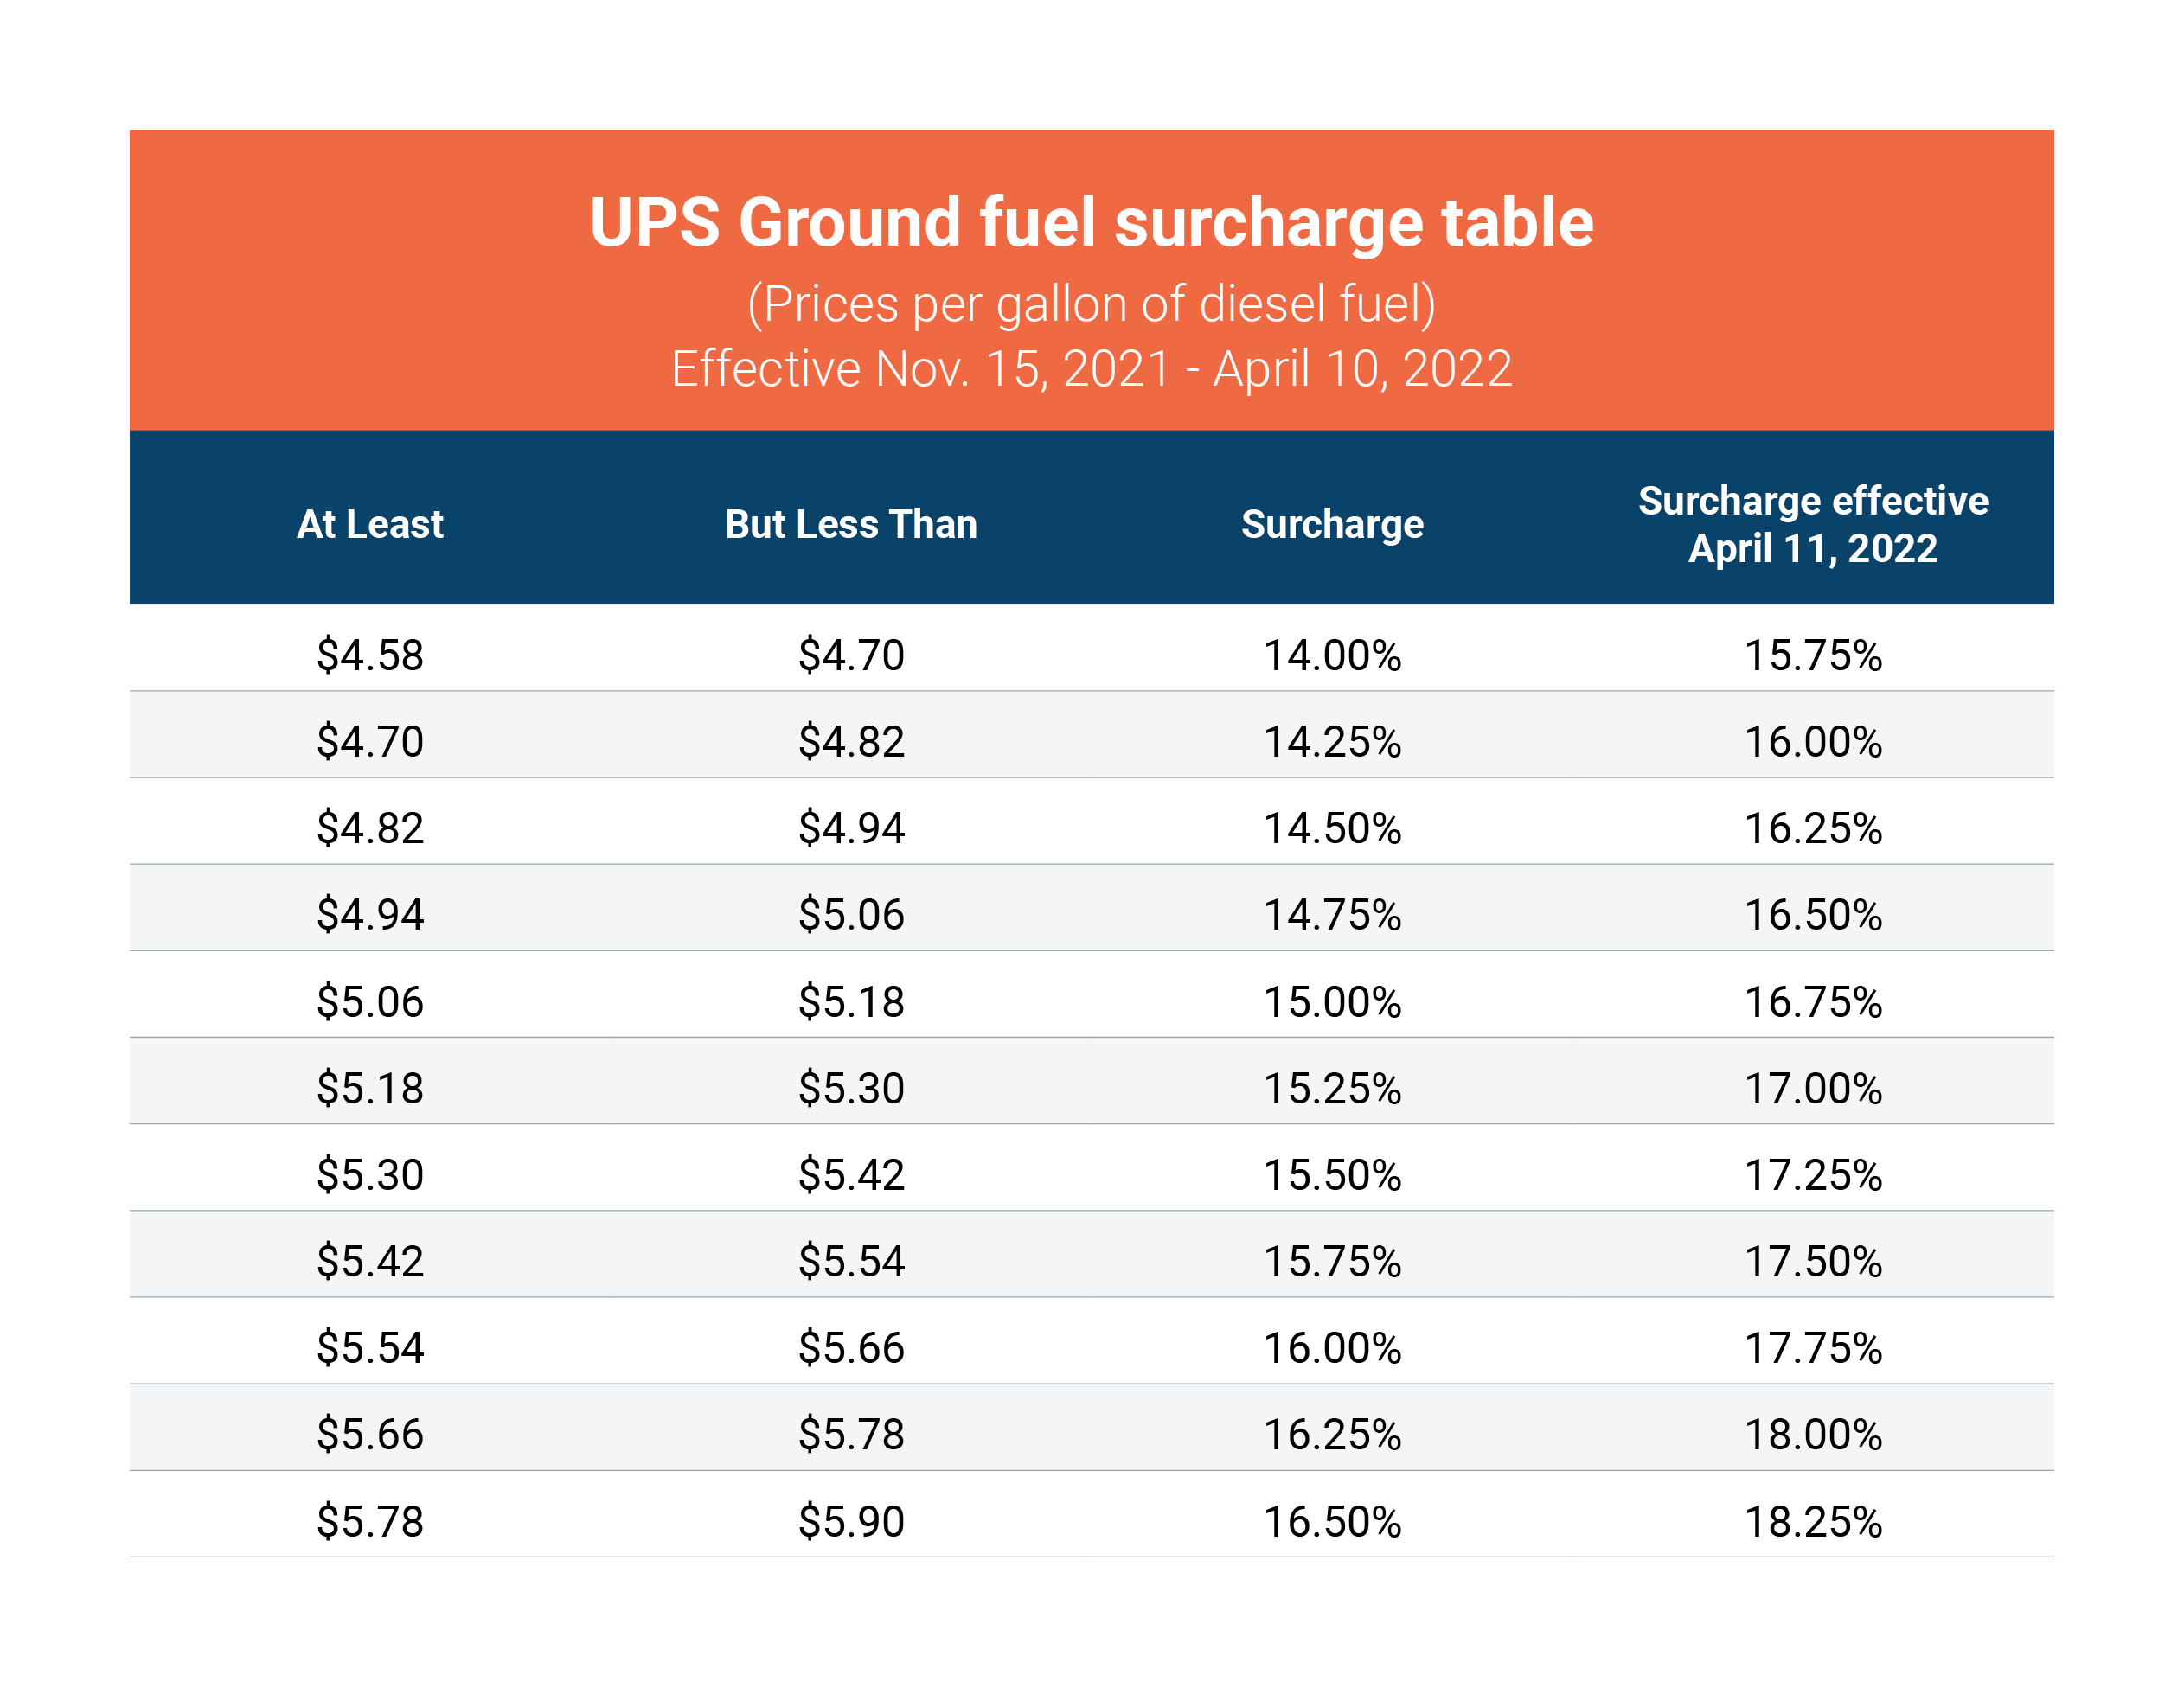 Snapshot of 2022 UPS Ground fuel surcharges